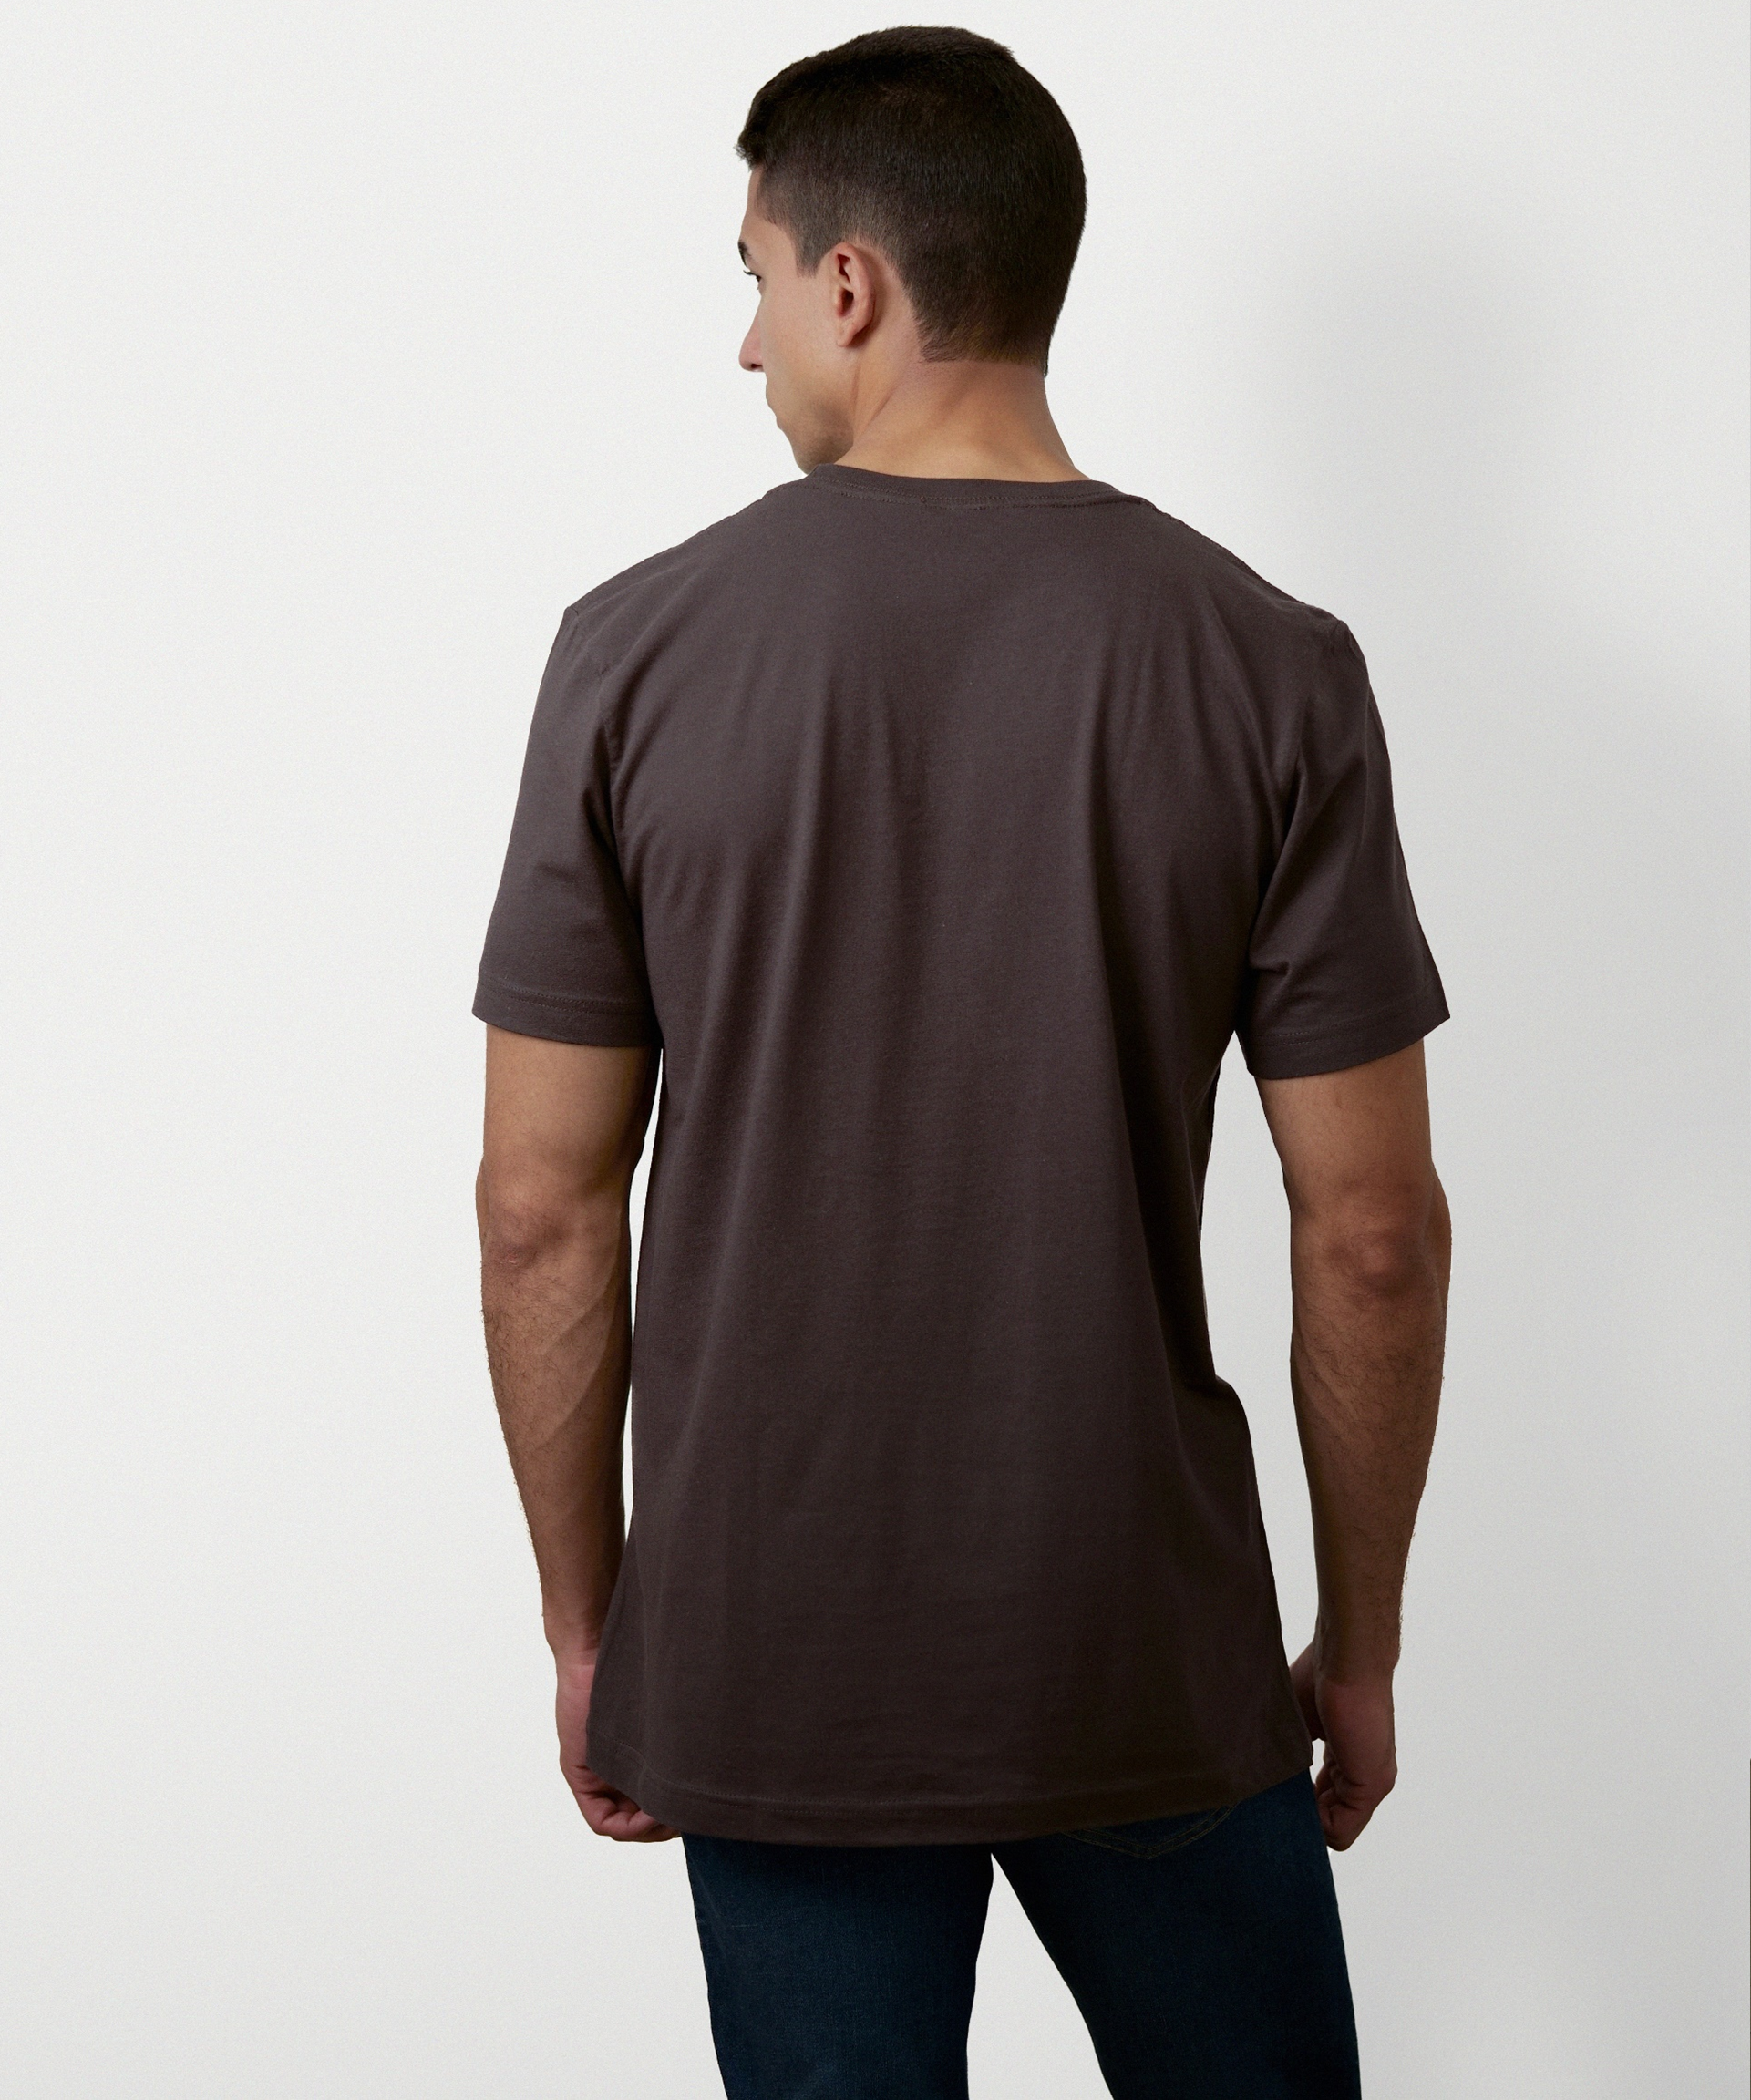 Signature Short Sleeve T-Shirt for Men (Brown)